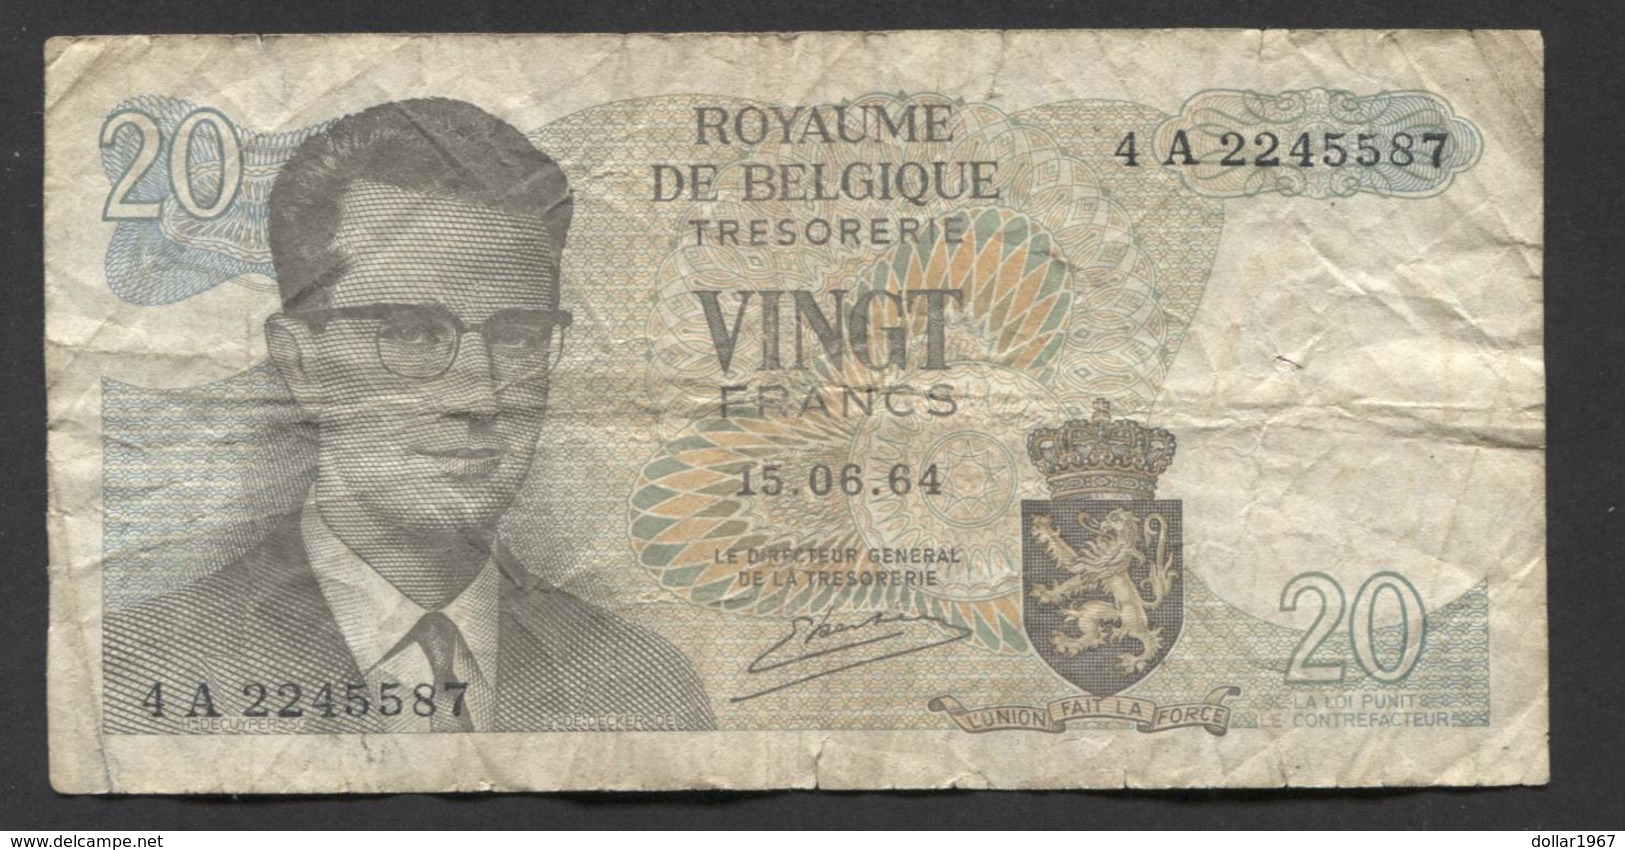 België Belgique Belgium 15 06 1964 -  20 Francs Atomium Baudouin. 4 A 2245587 - 20 Francs